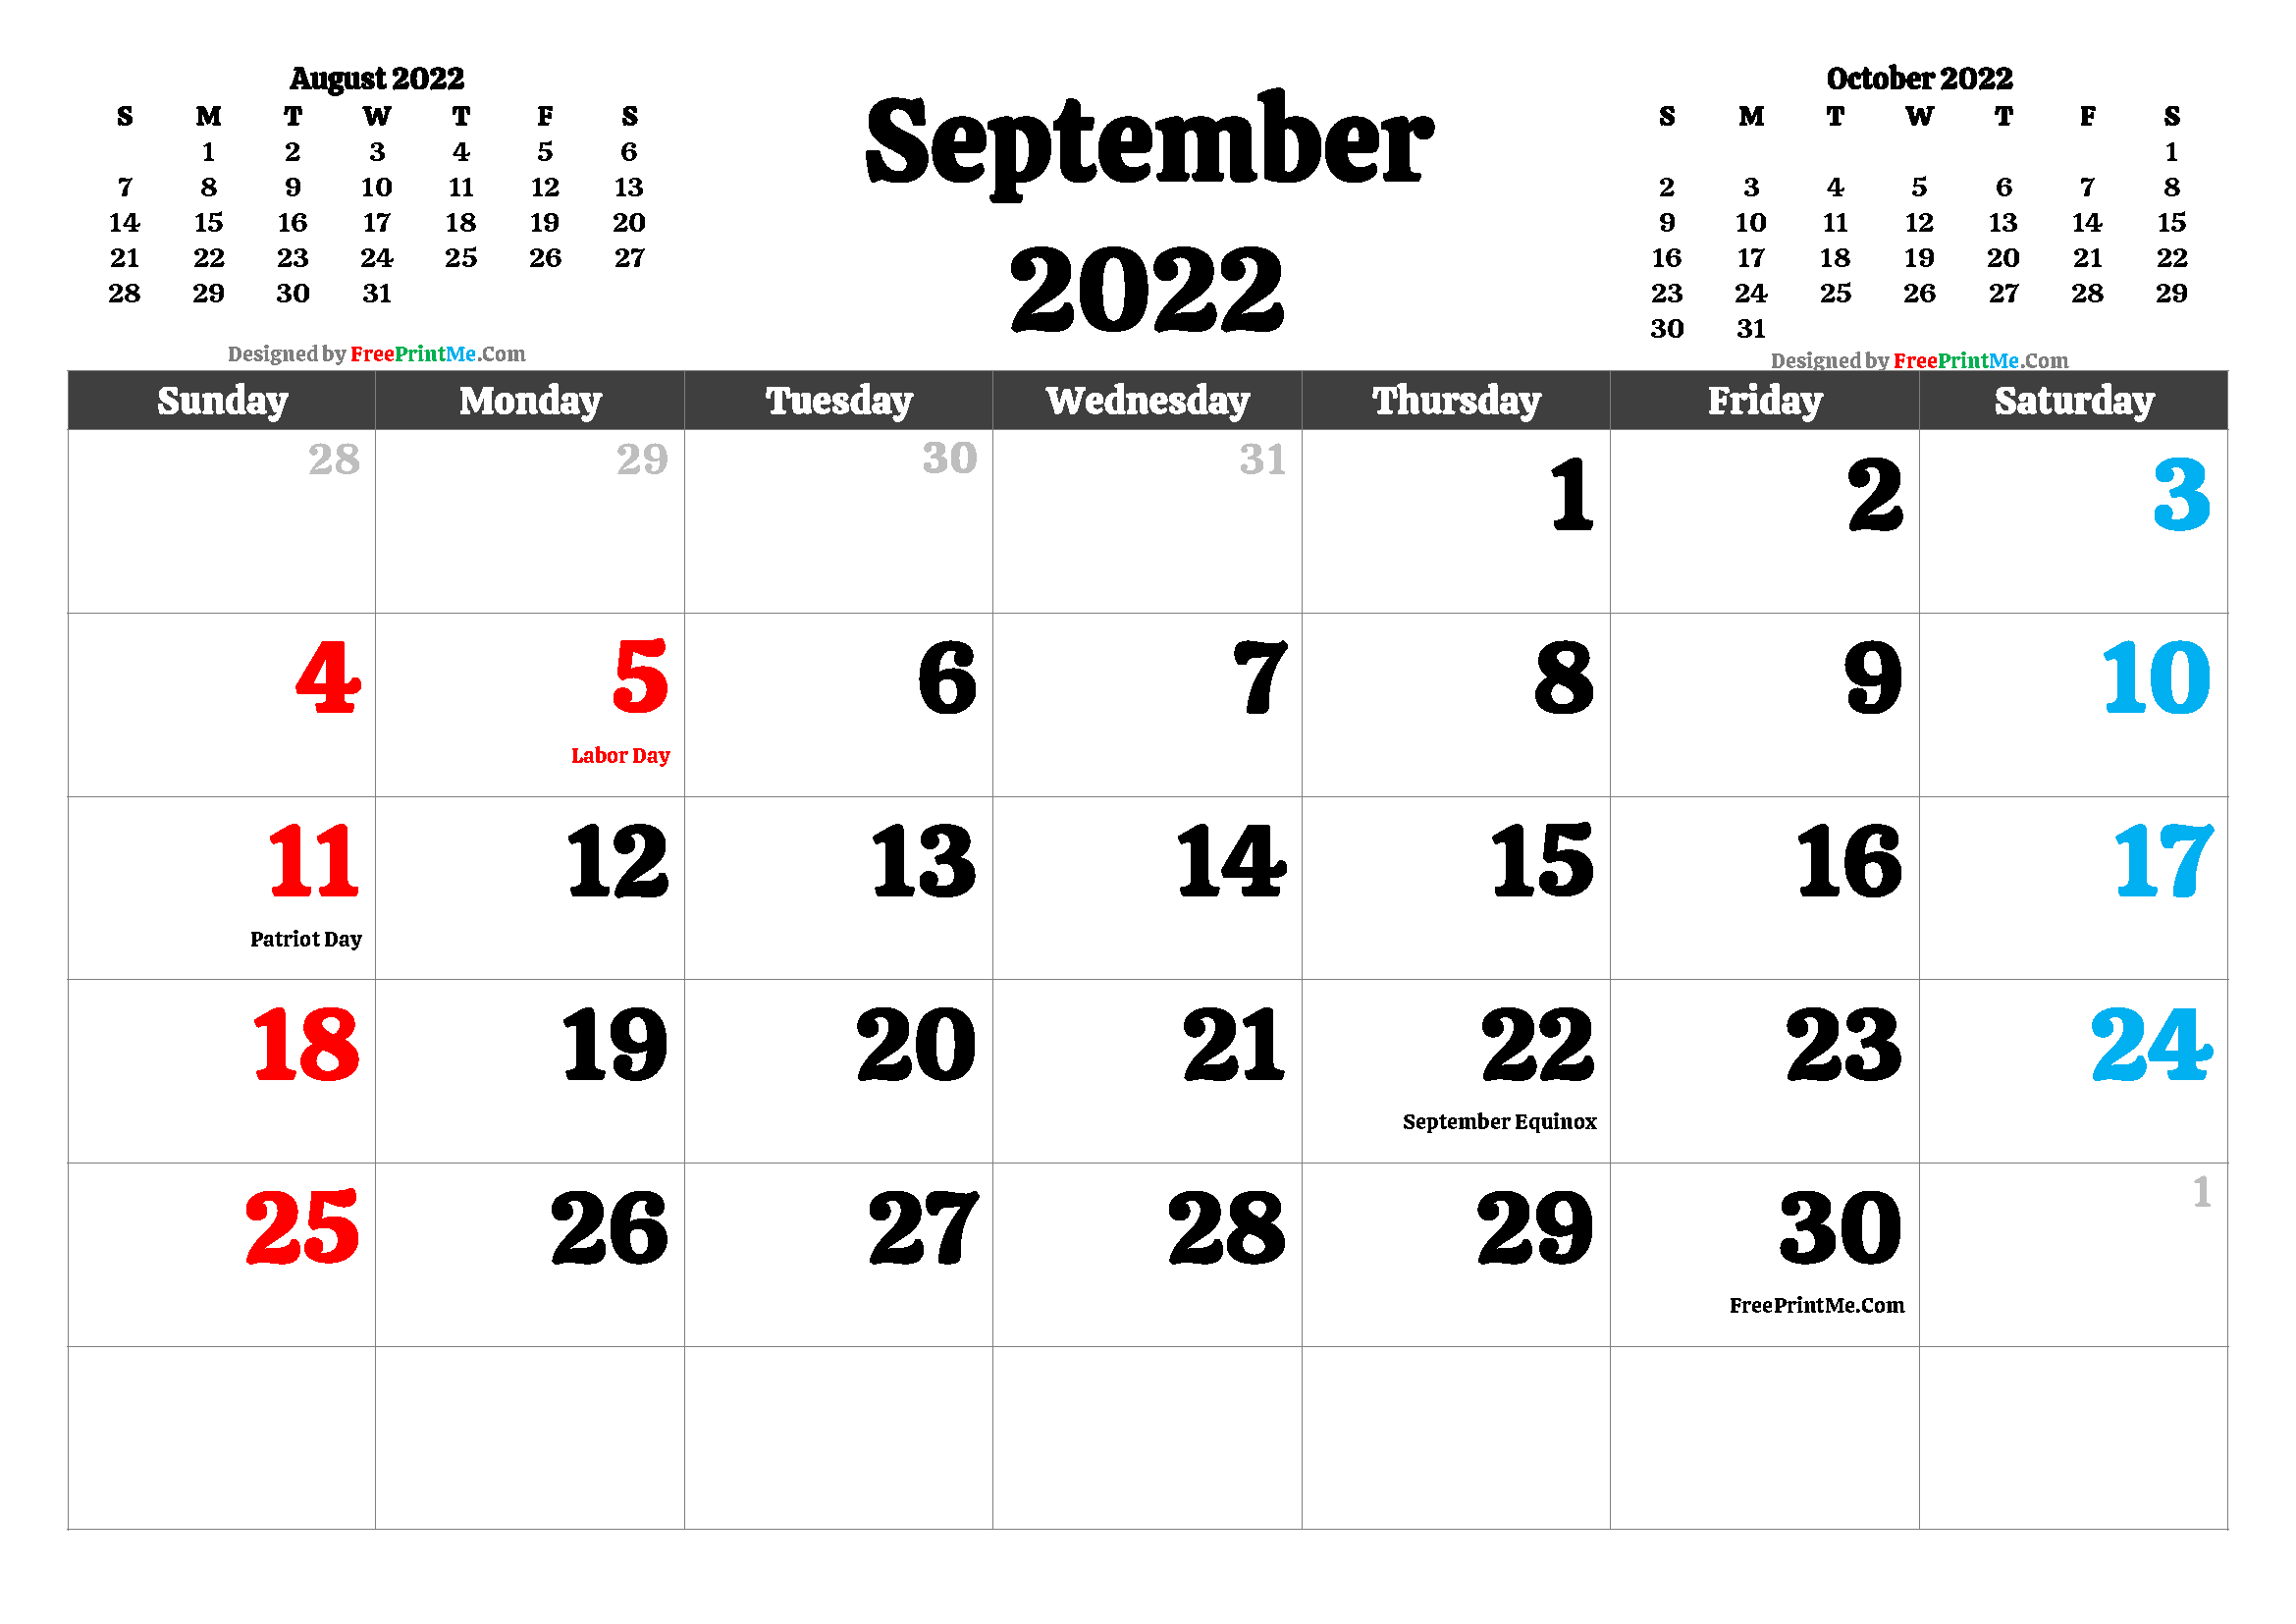 September Calendar 2022 With Holidays Free Printable September 2022 Calendar With Holidays - Freeprintme.com